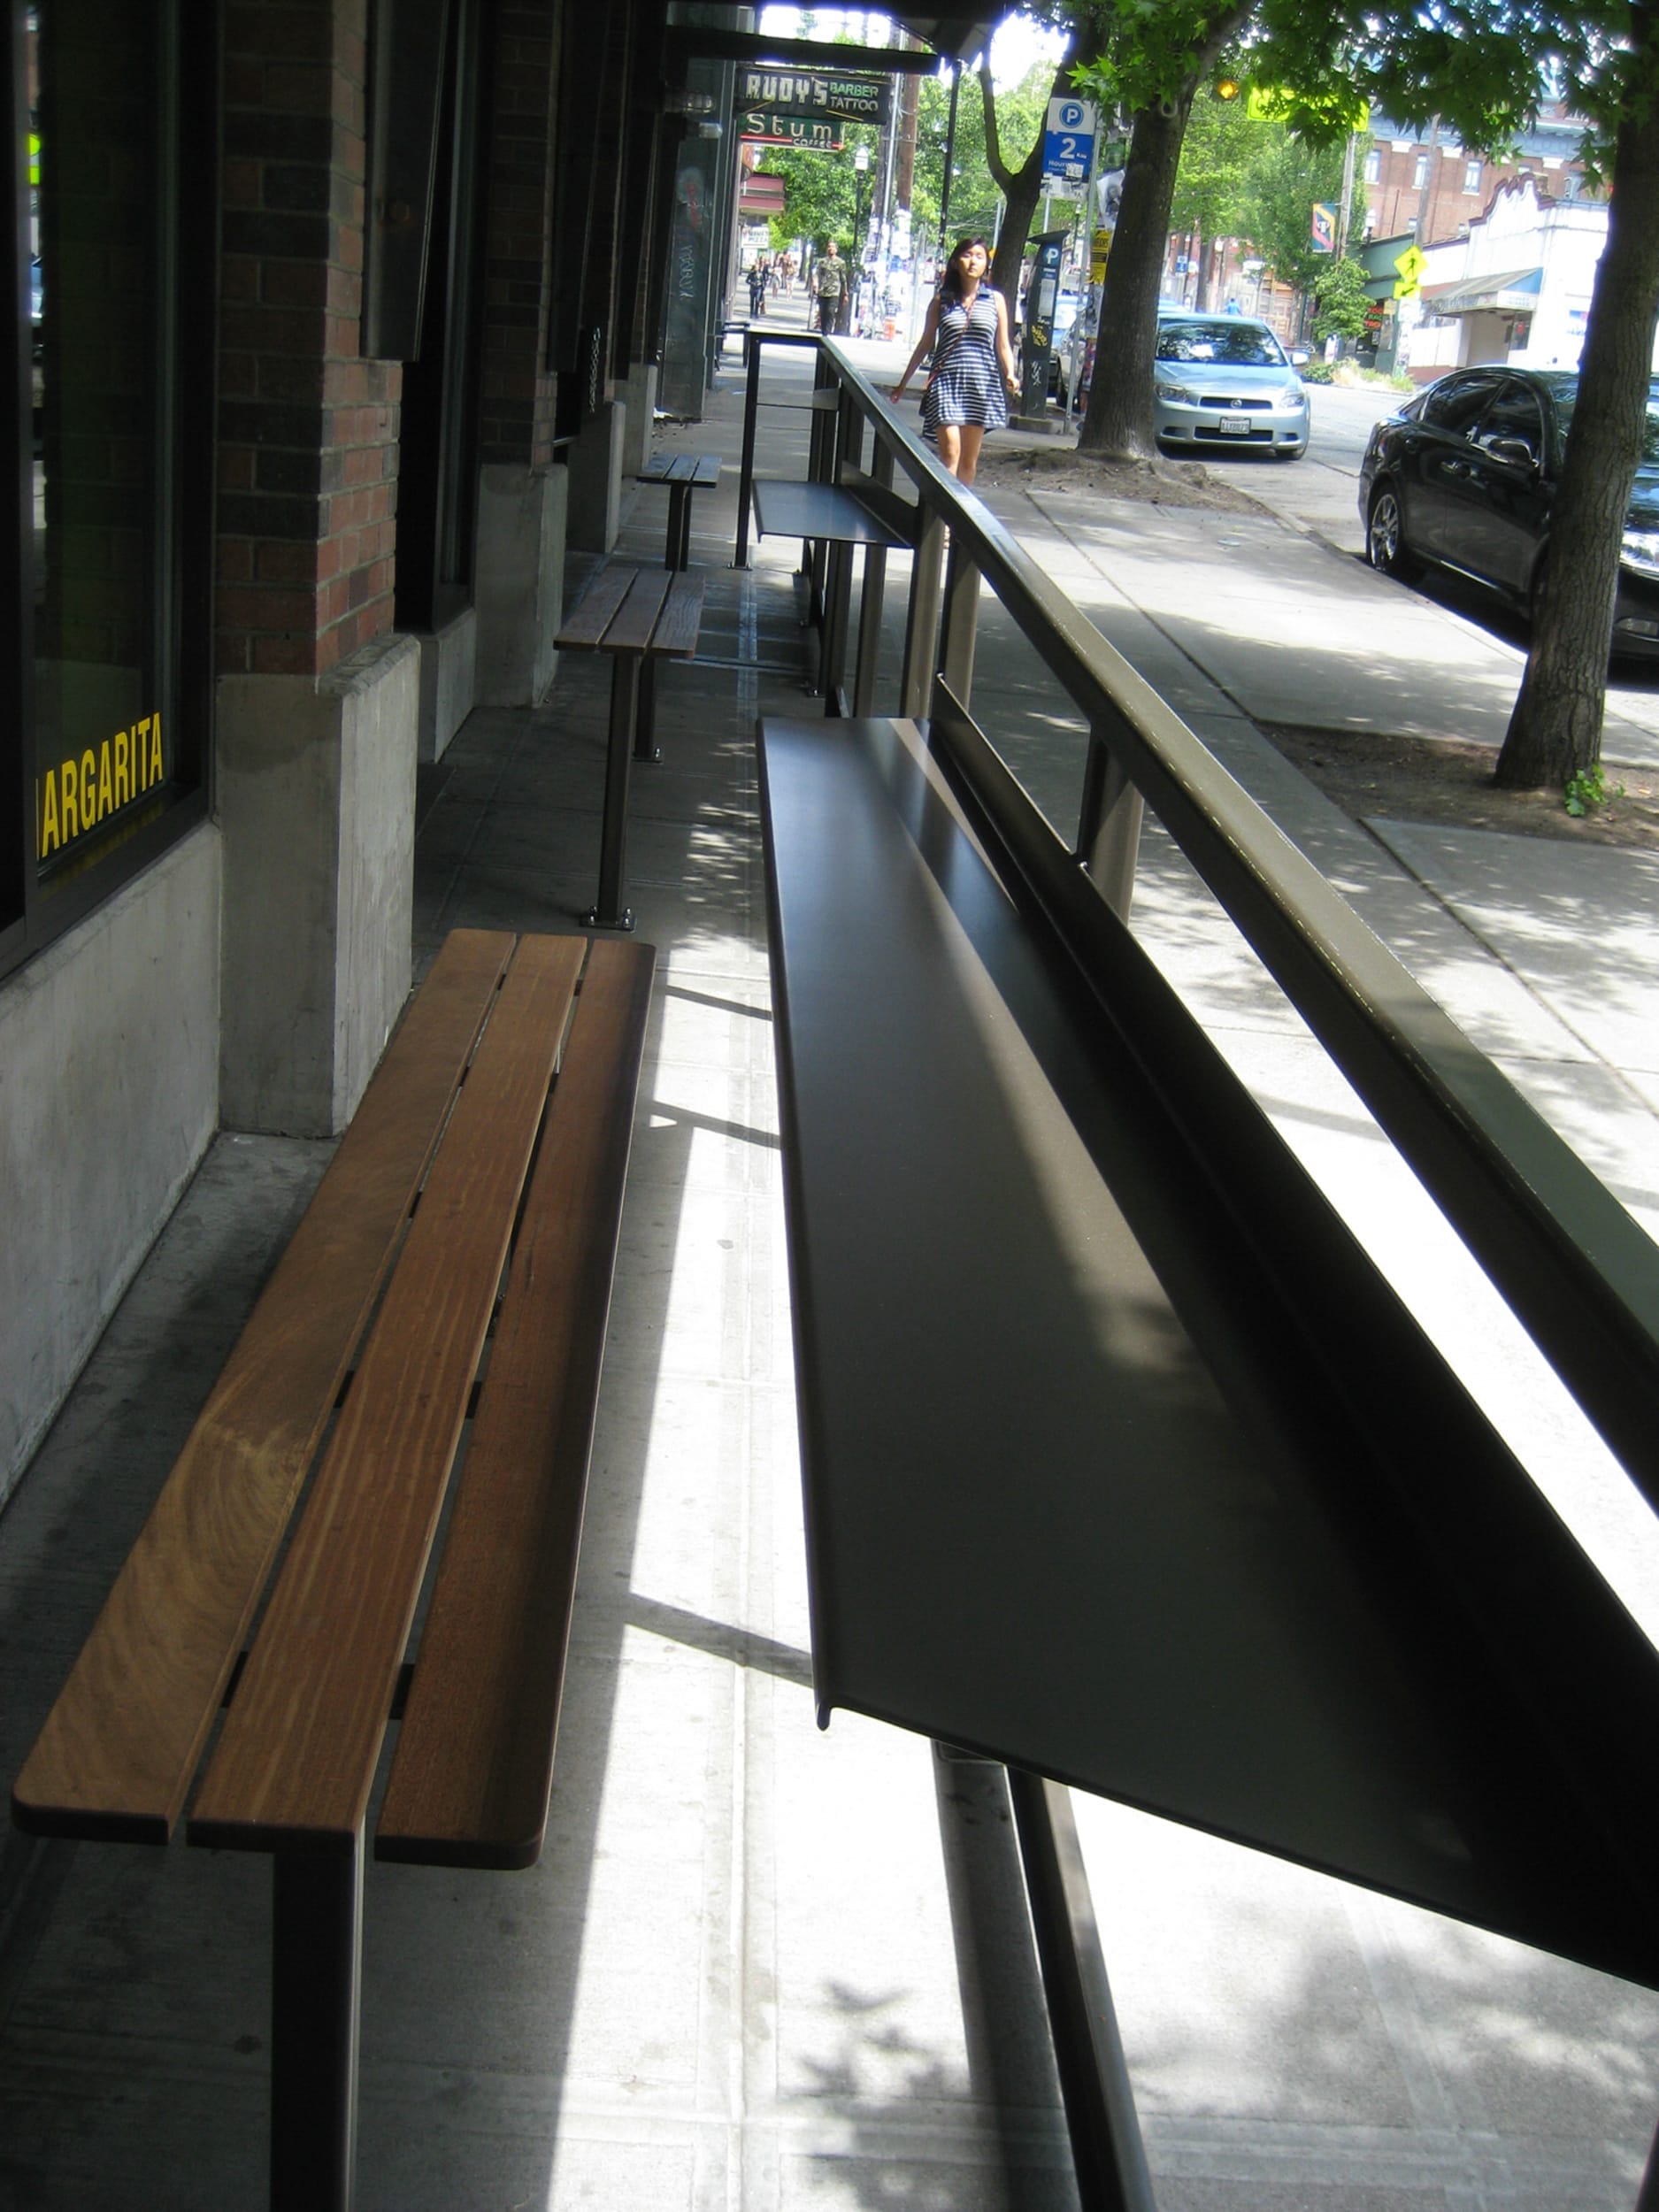 A wooden bench on a sidewalk.